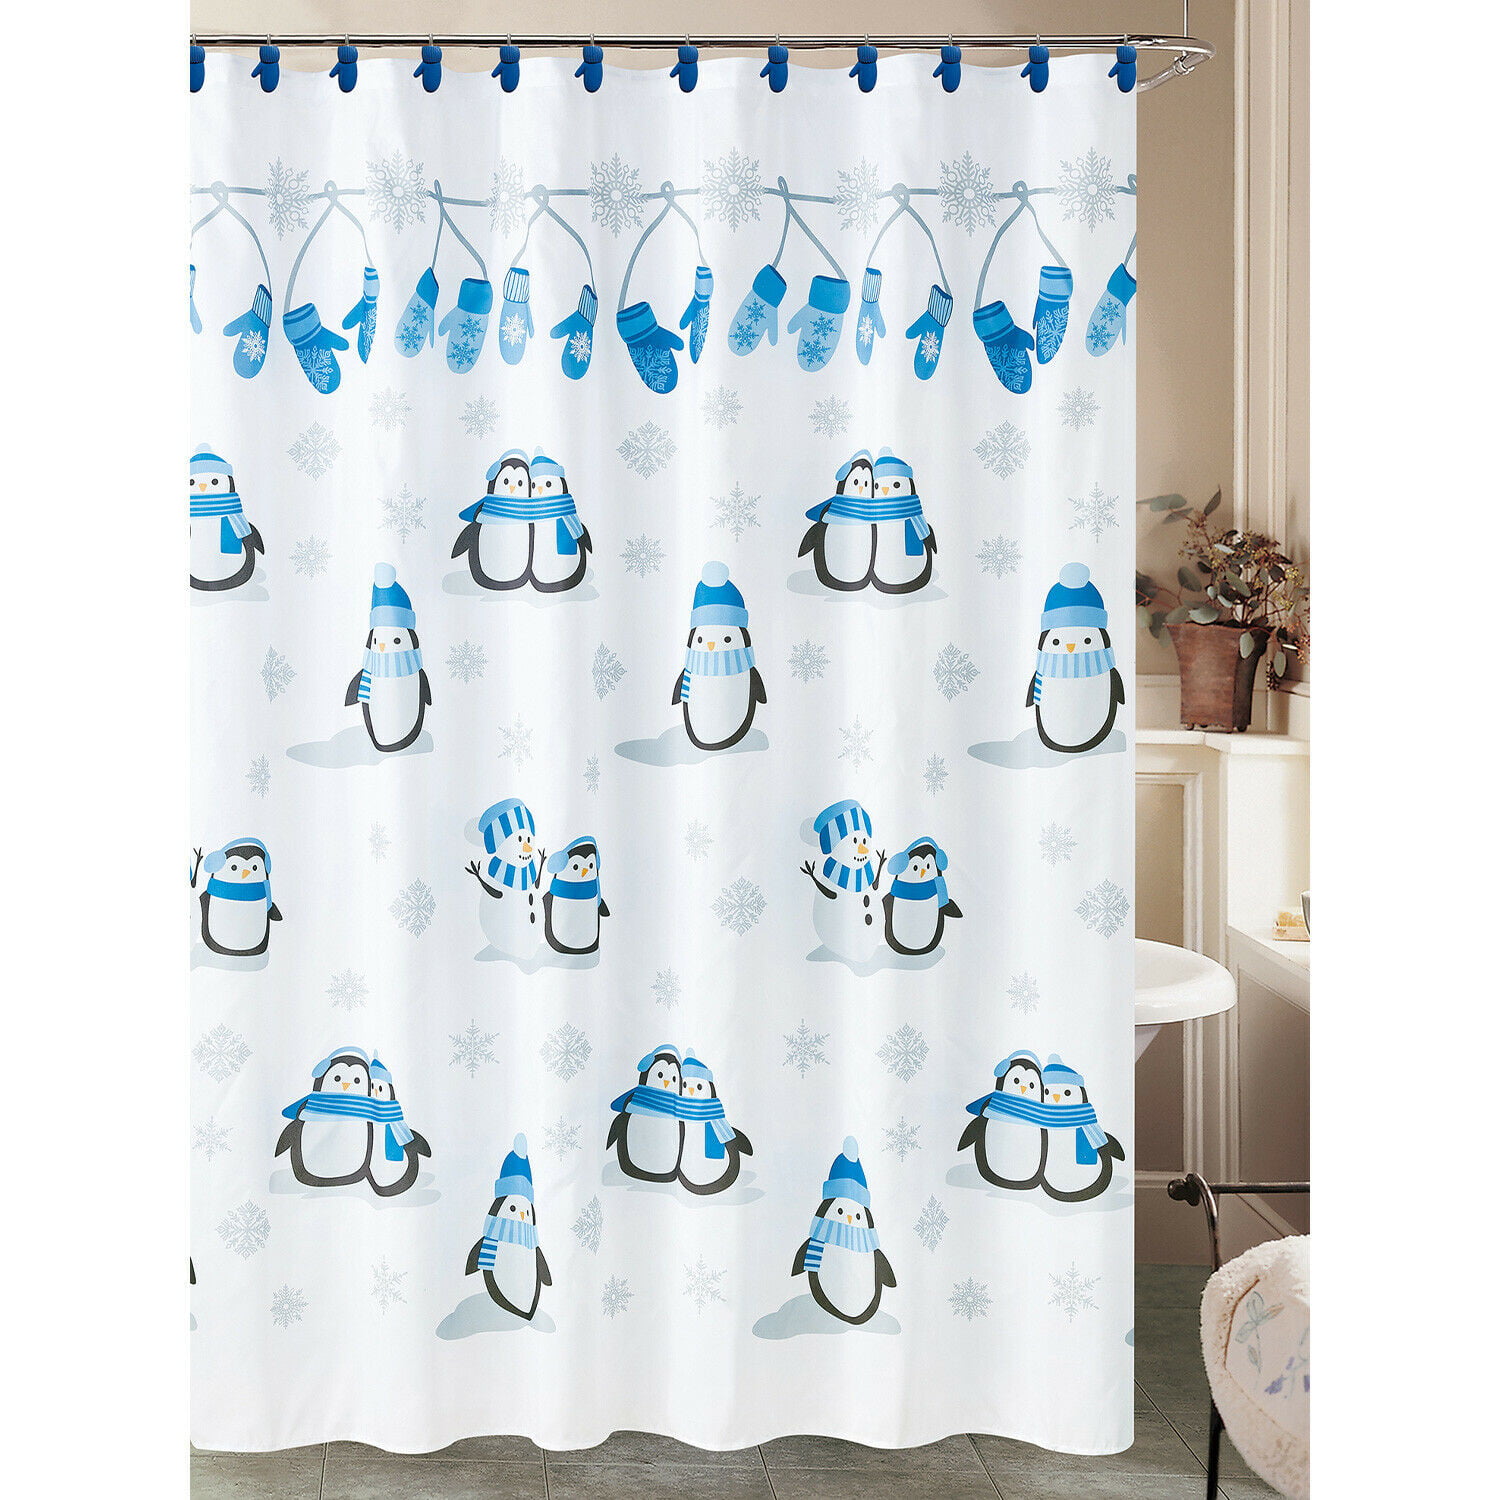 Christmas Ball Winter Snow Shower Curtain Liner Waterproof Fabric Bathroom Hooks 